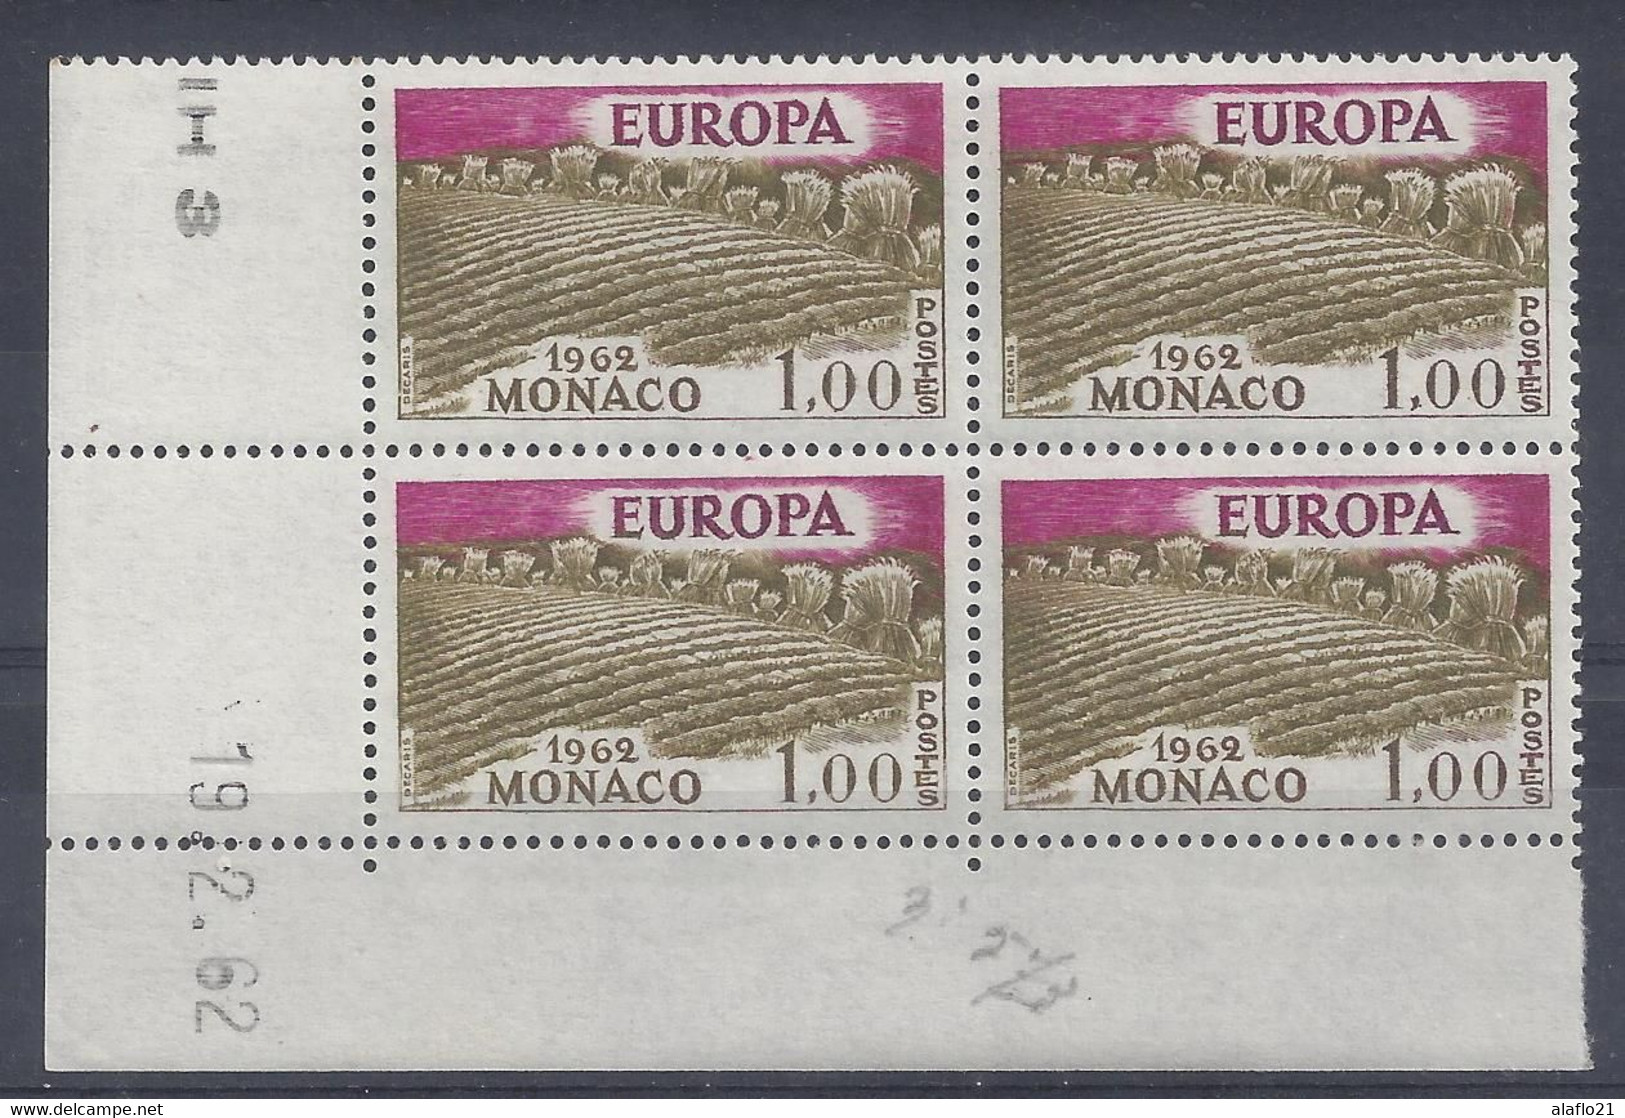 MONACO - N° 573 - EUROPA 1962 - Bloc De 4 COIN DATE - NEUF SANS CHARNIERE - 19/2/62 - Unused Stamps